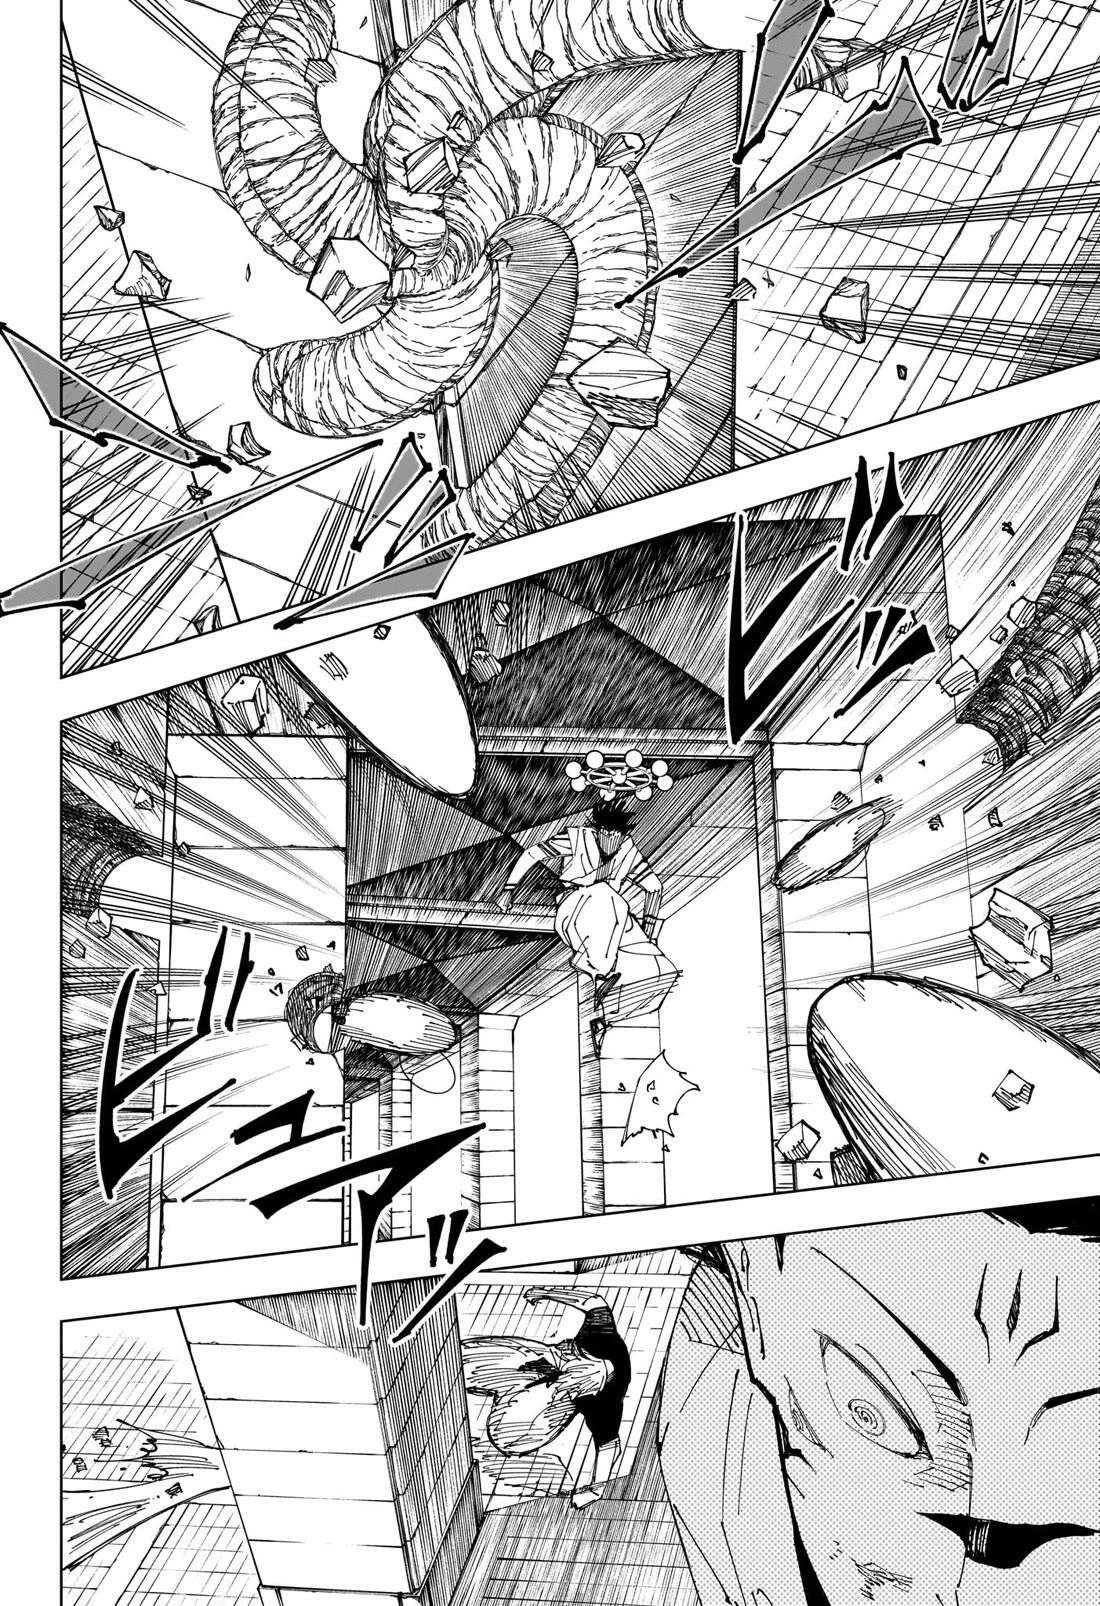 Jujutsu Kaisen Chapter 232: The Decisive Battle In The Uninhabited, Demon-Infested Shinjuku ⑩ page 5 - Mangakakalot